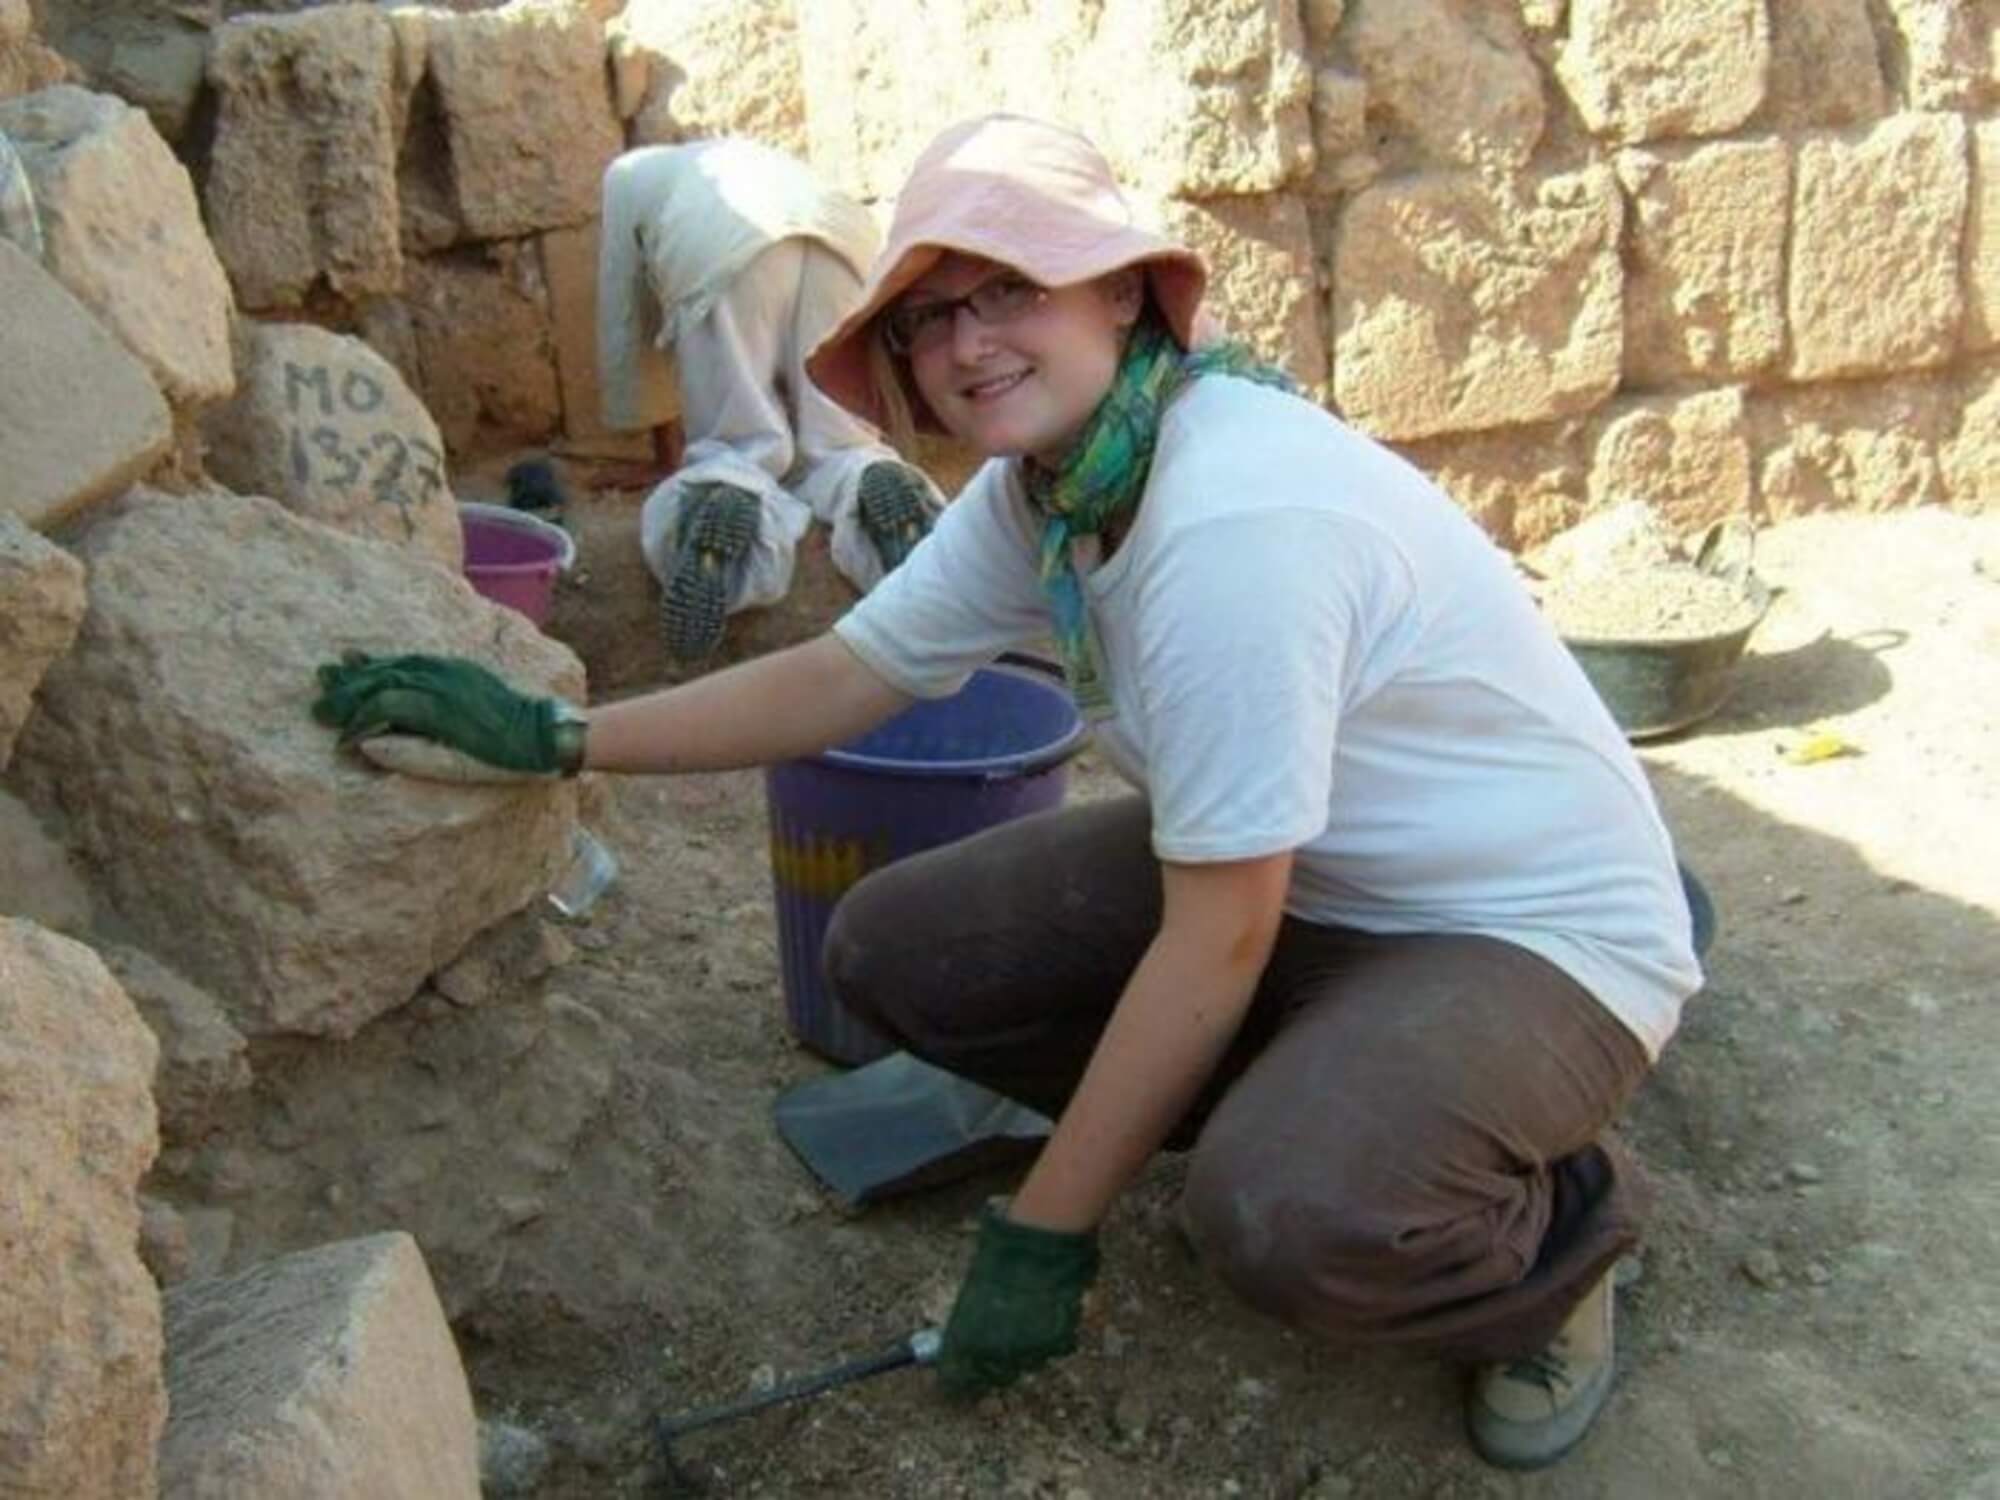 Dr. Sophie Lund Rasmussen at the excavation site